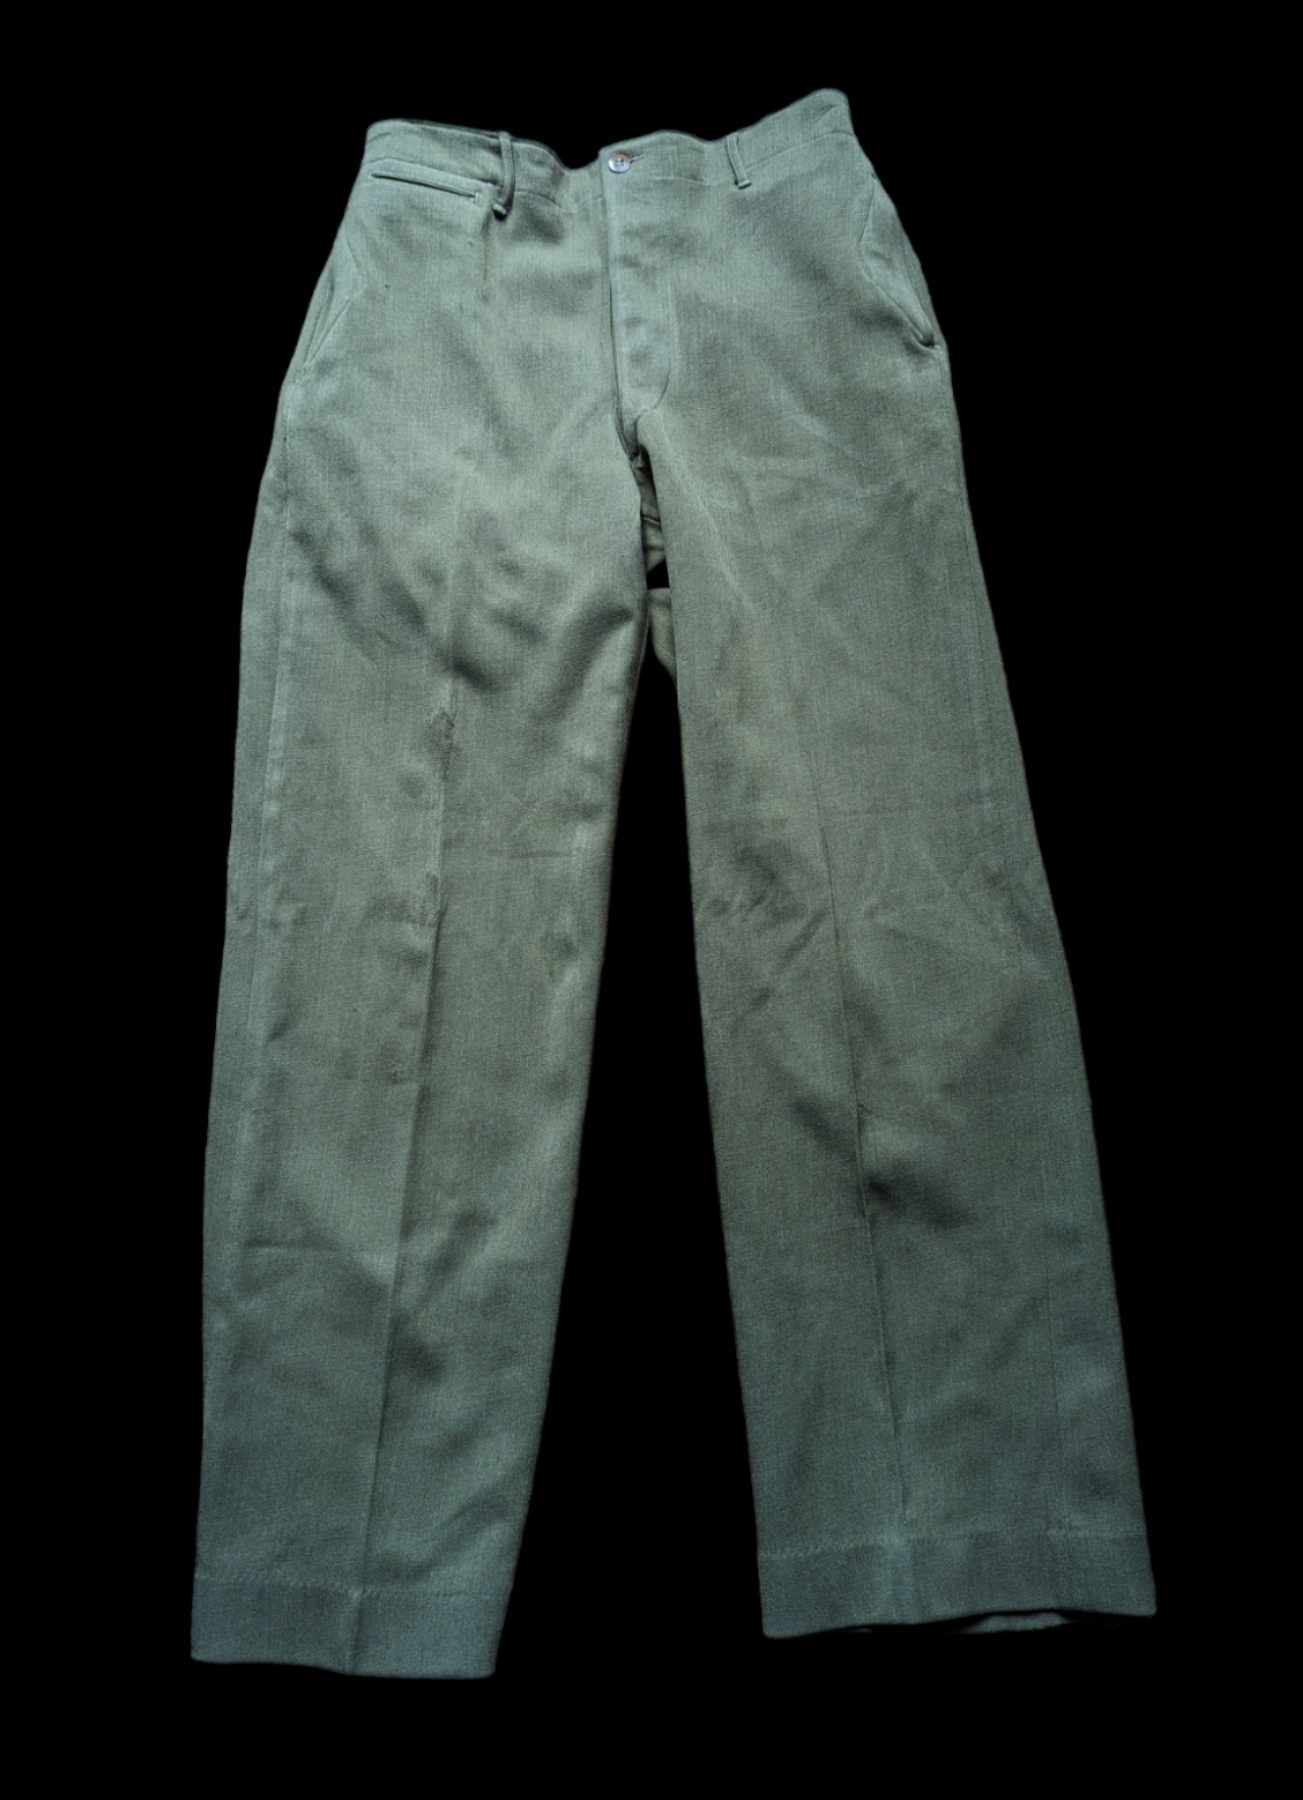 militaria : pantalon moutarde US m37 33x33/ US ww2 m37 trousers laundry